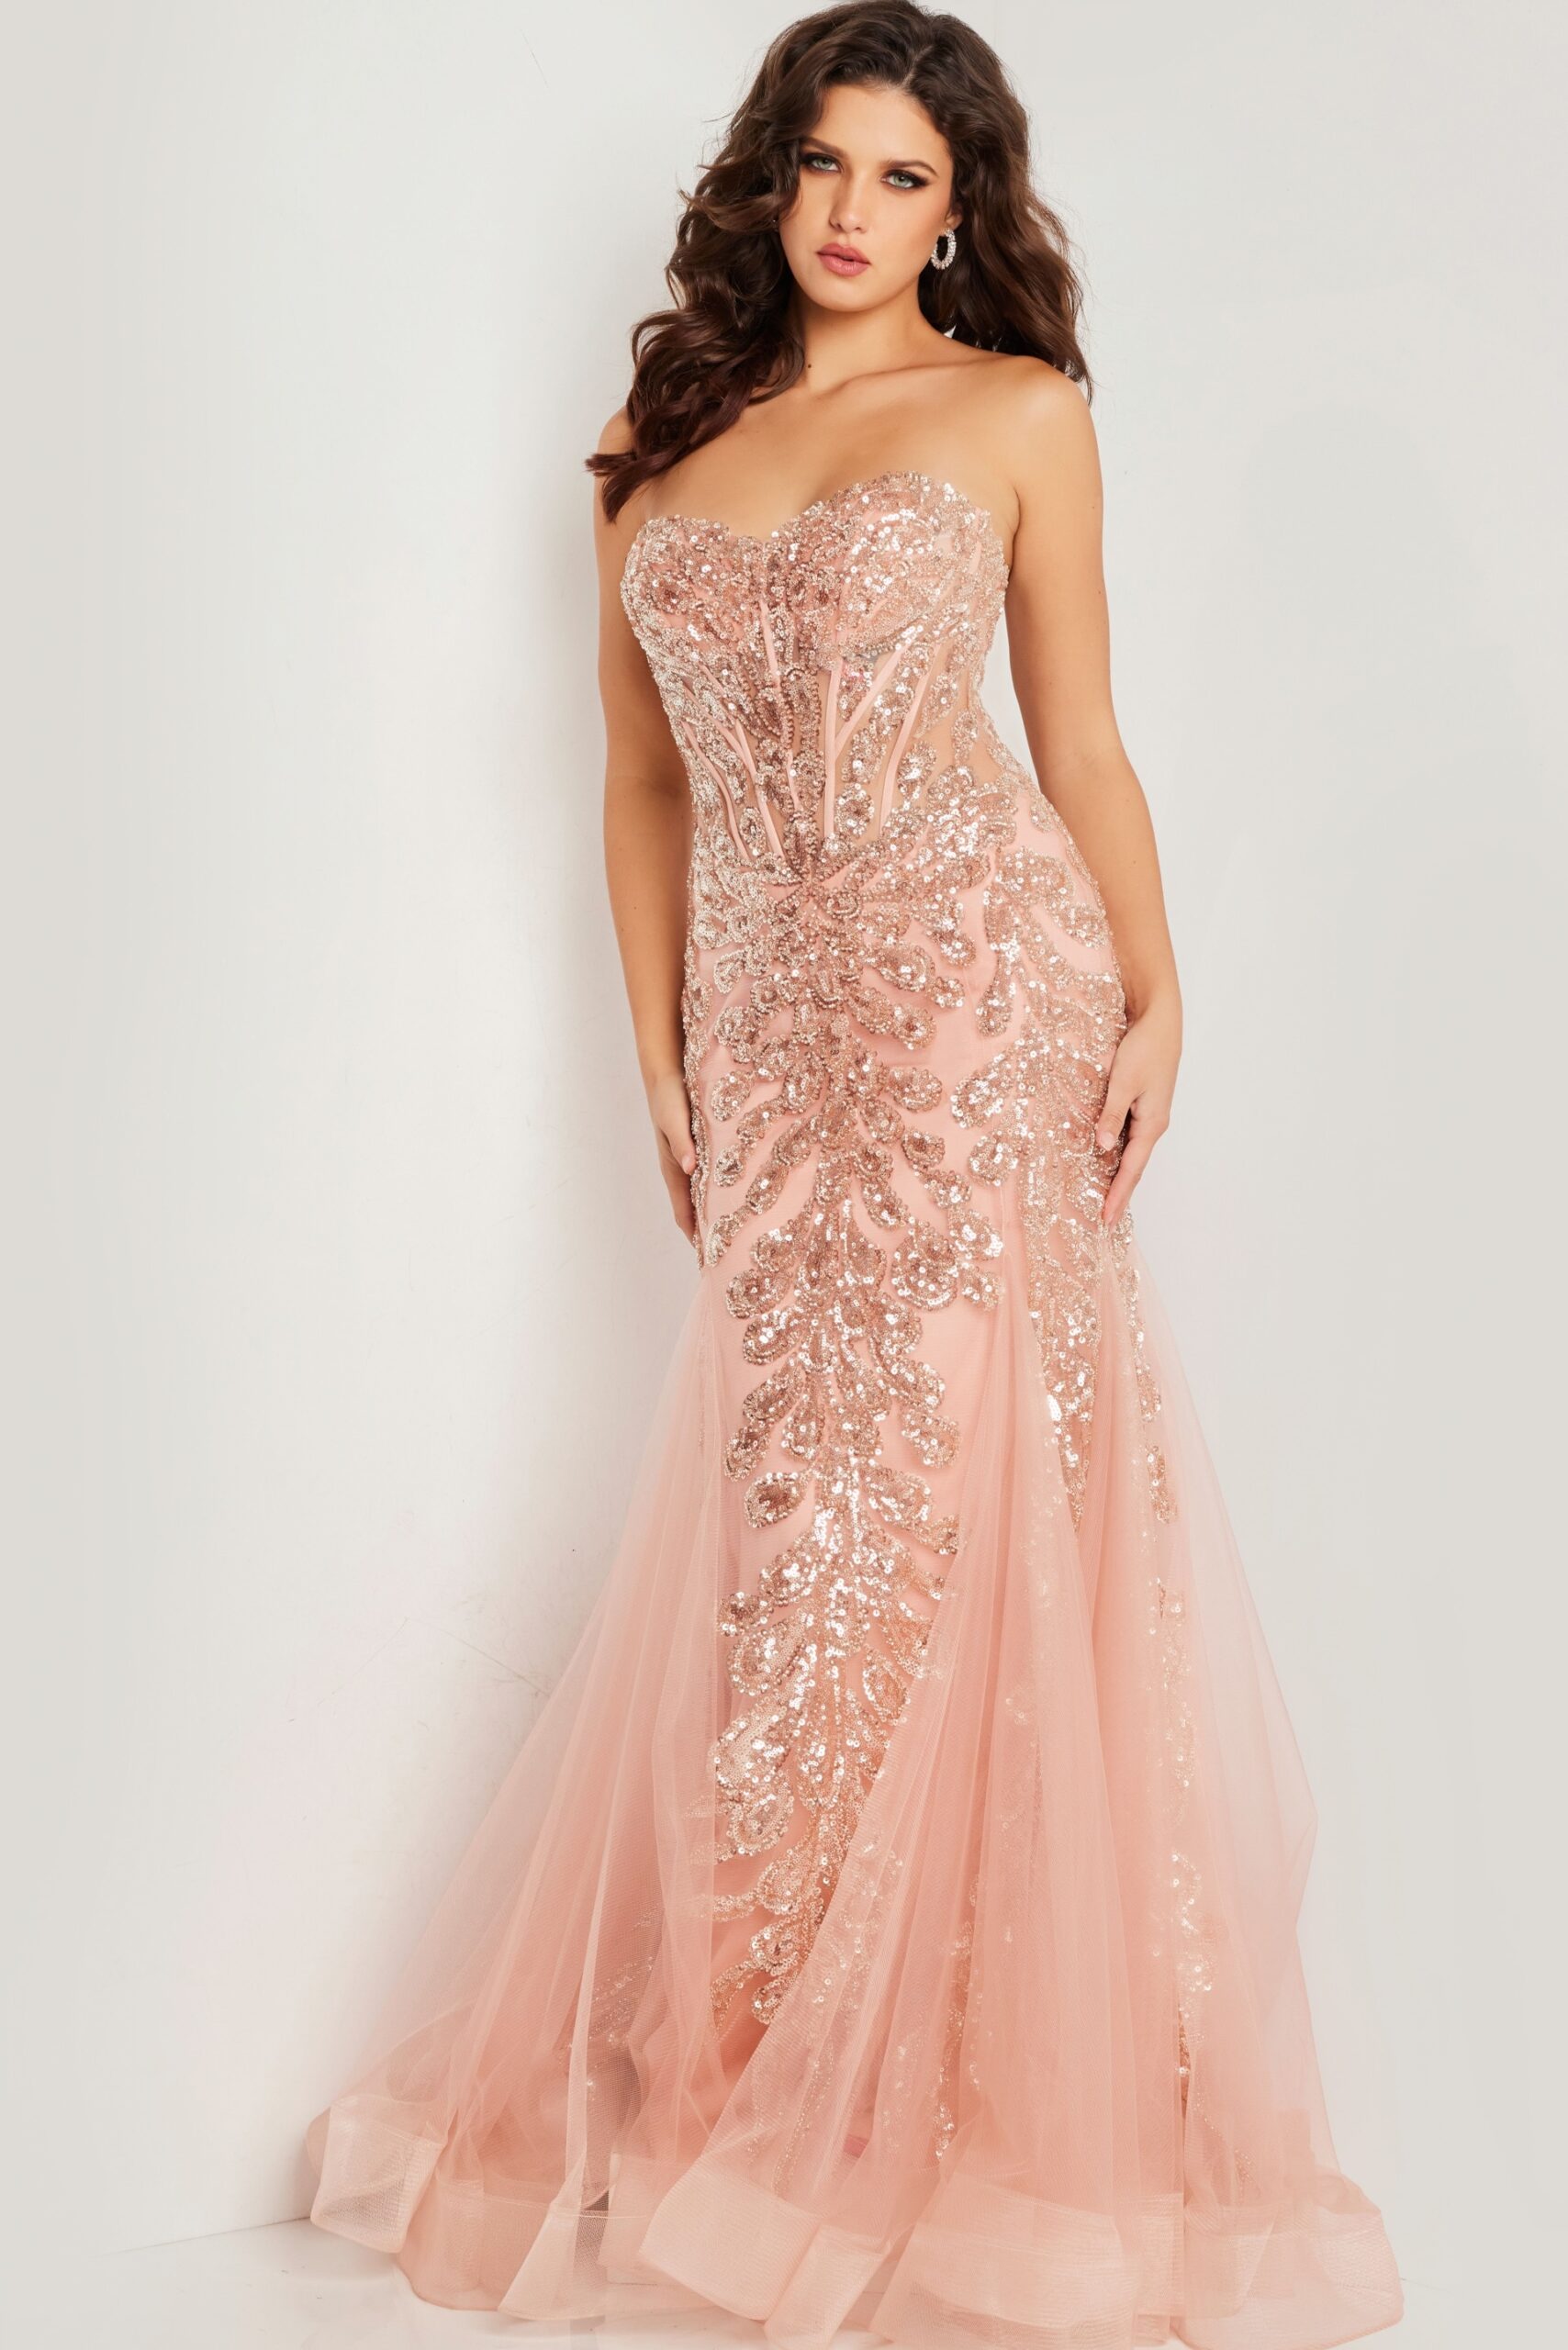 Blush Sweetheart Neckline Embellished Dress 37412